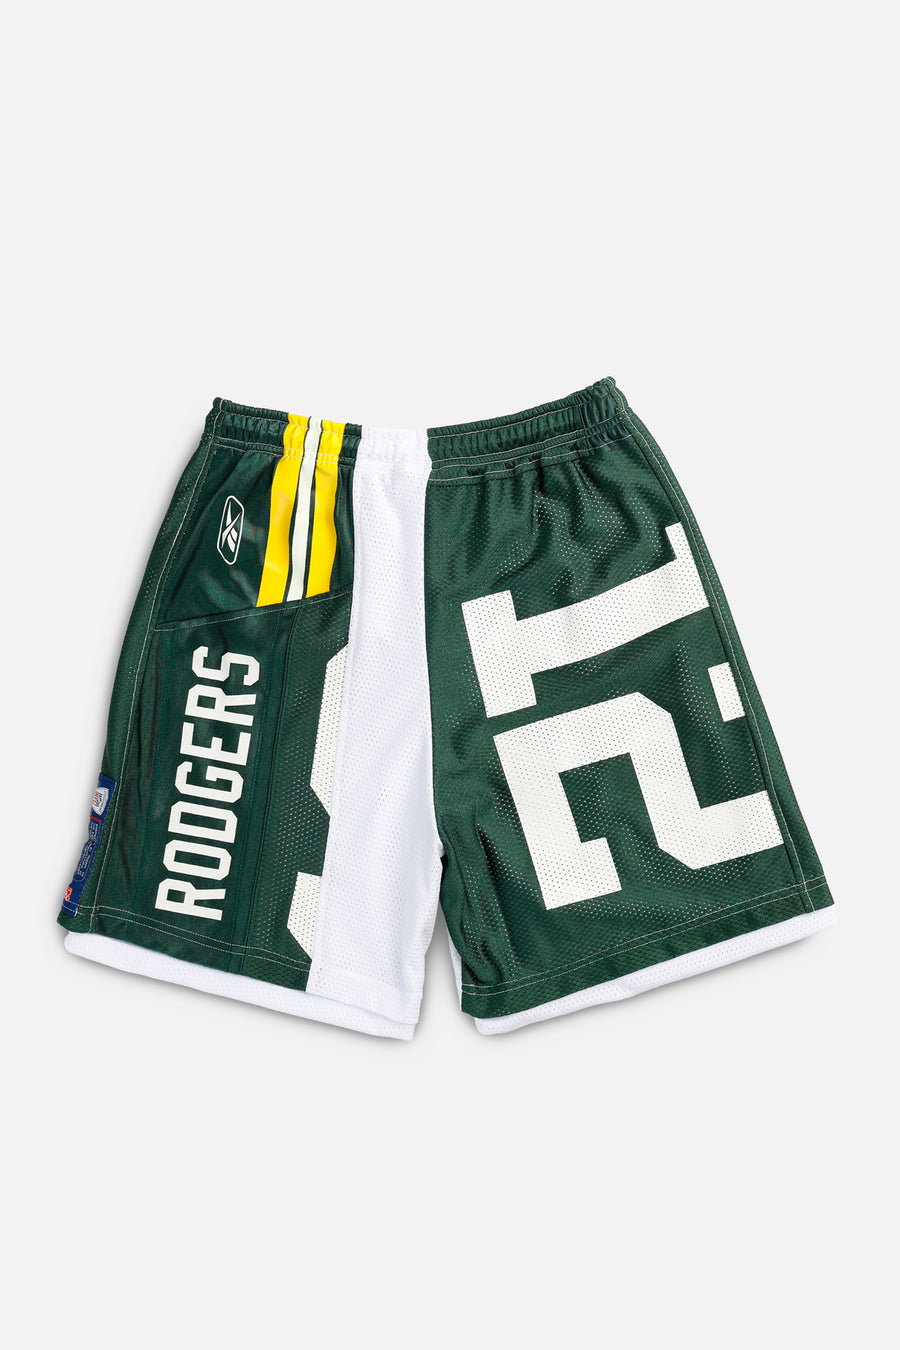 Unisex Rework Greenbay Packers NFL Jersey Shorts - L